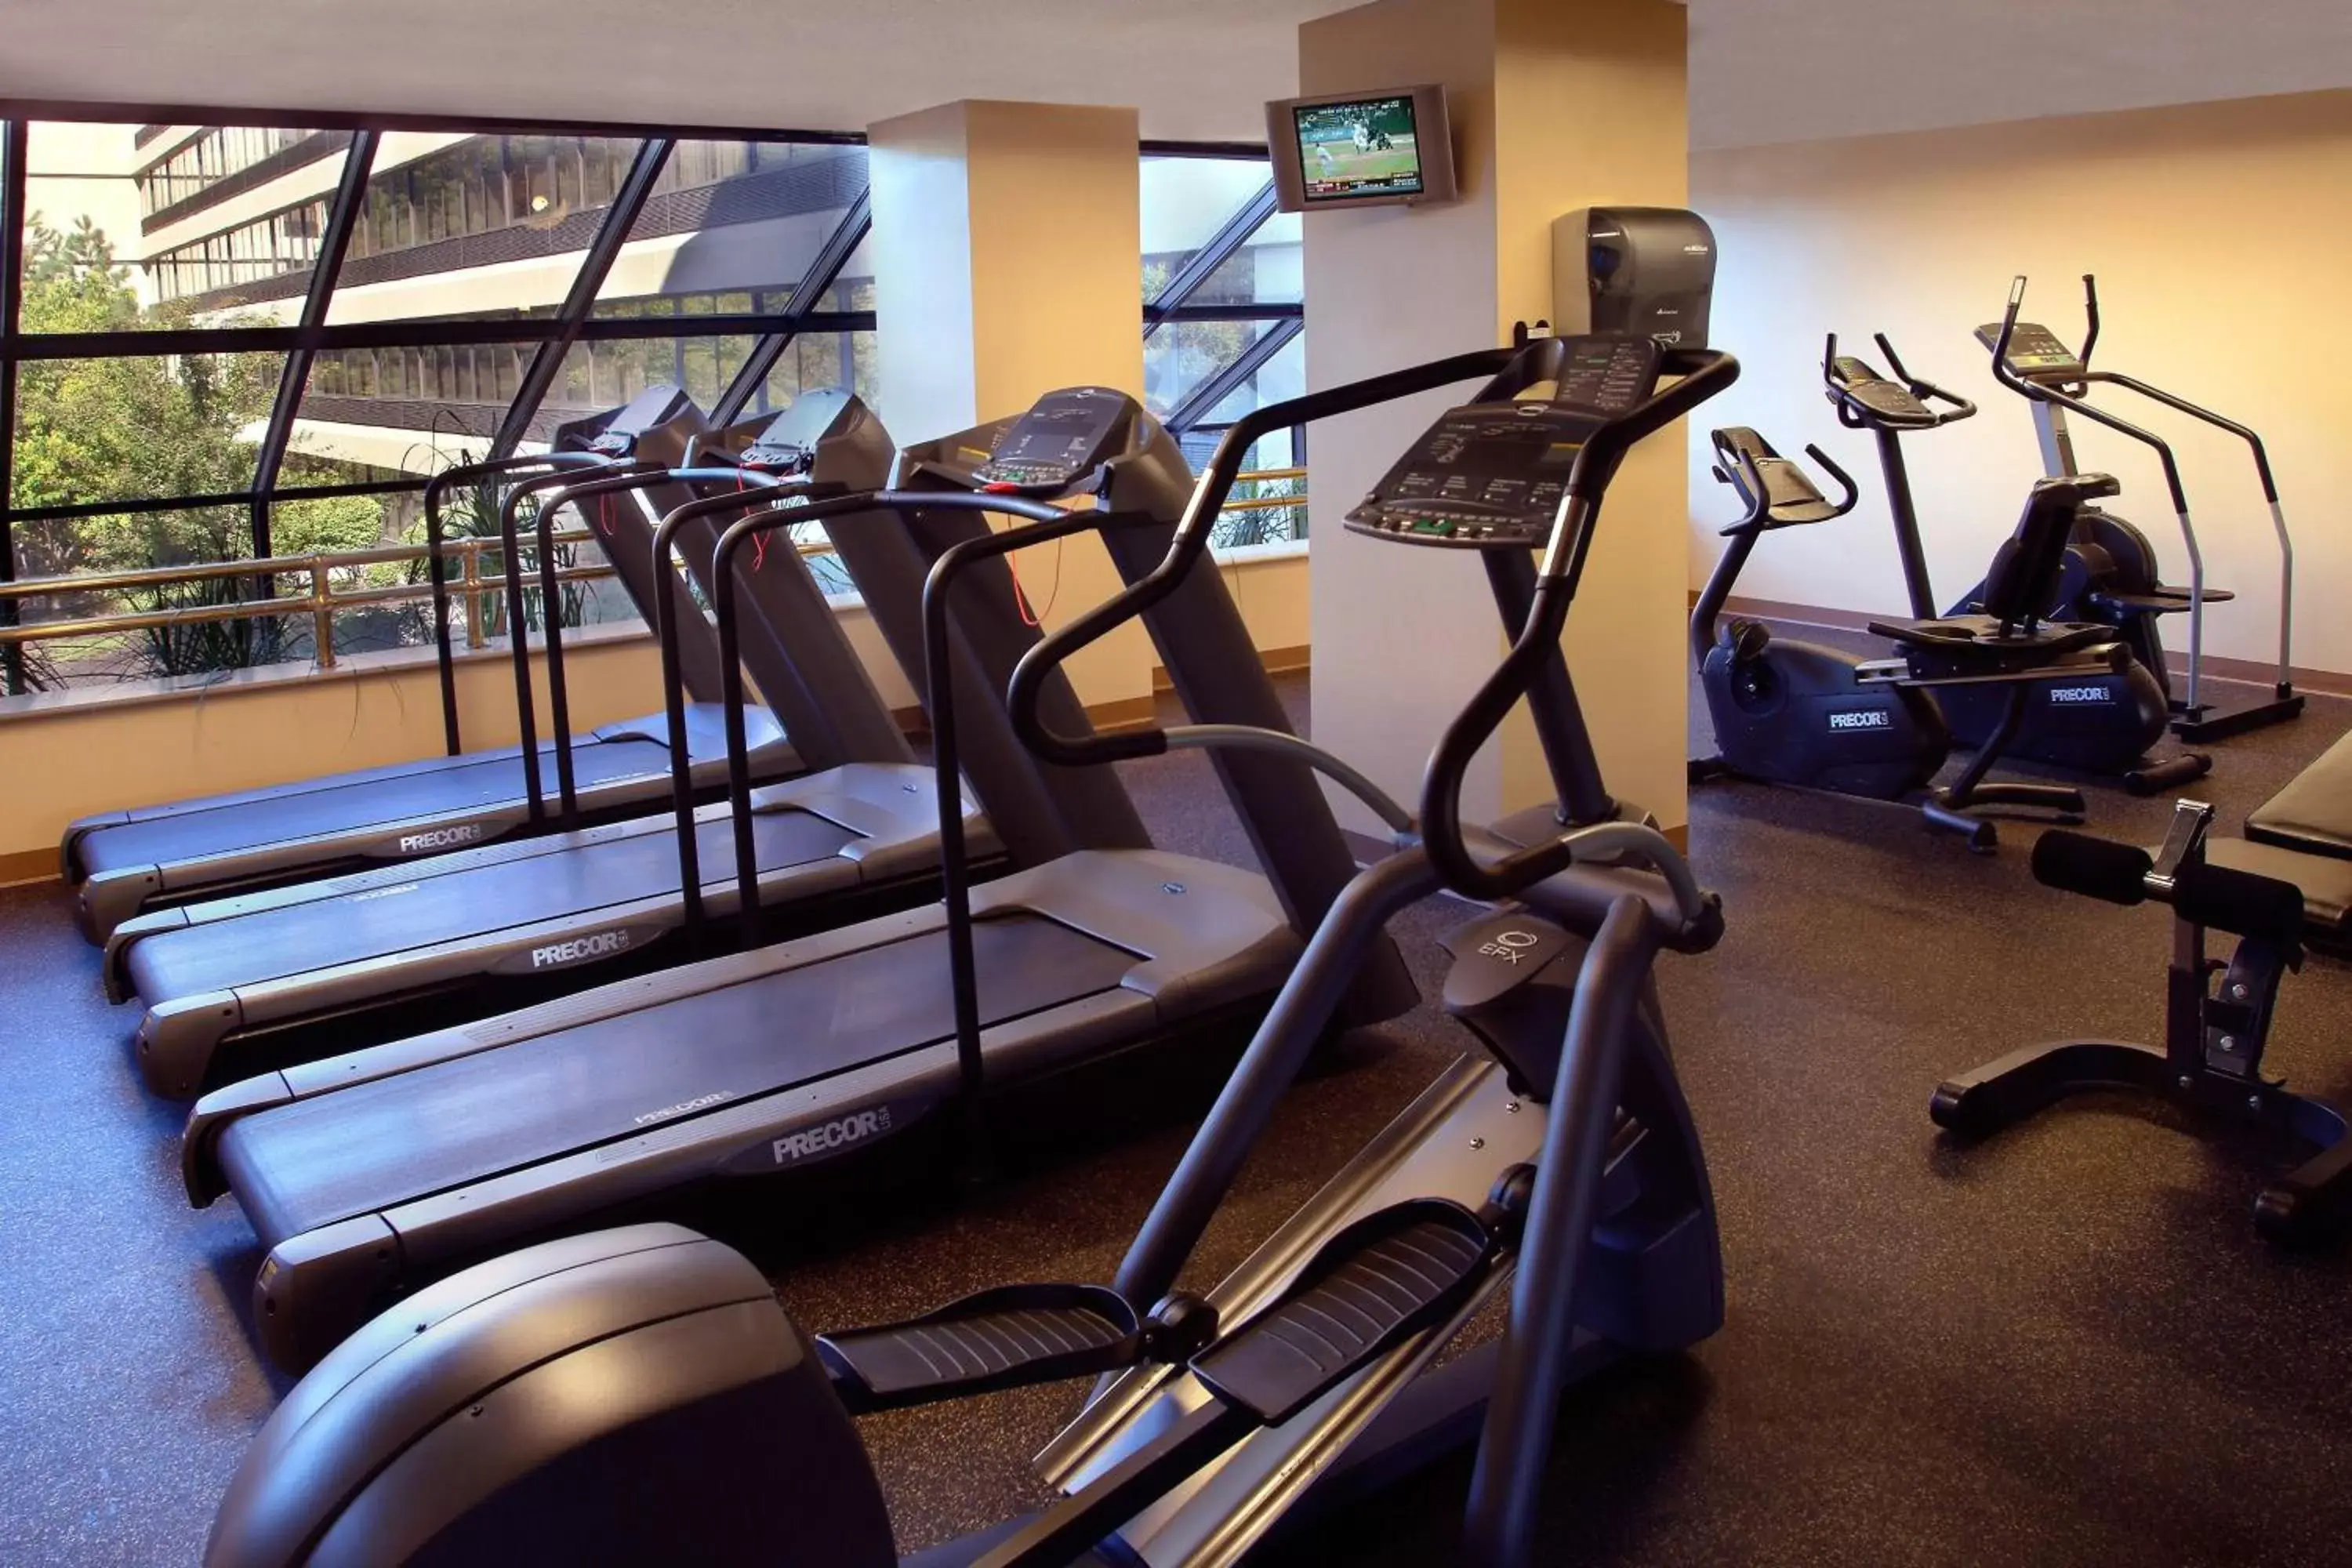 Fitness centre/facilities, Fitness Center/Facilities in Boston Marriott Peabody